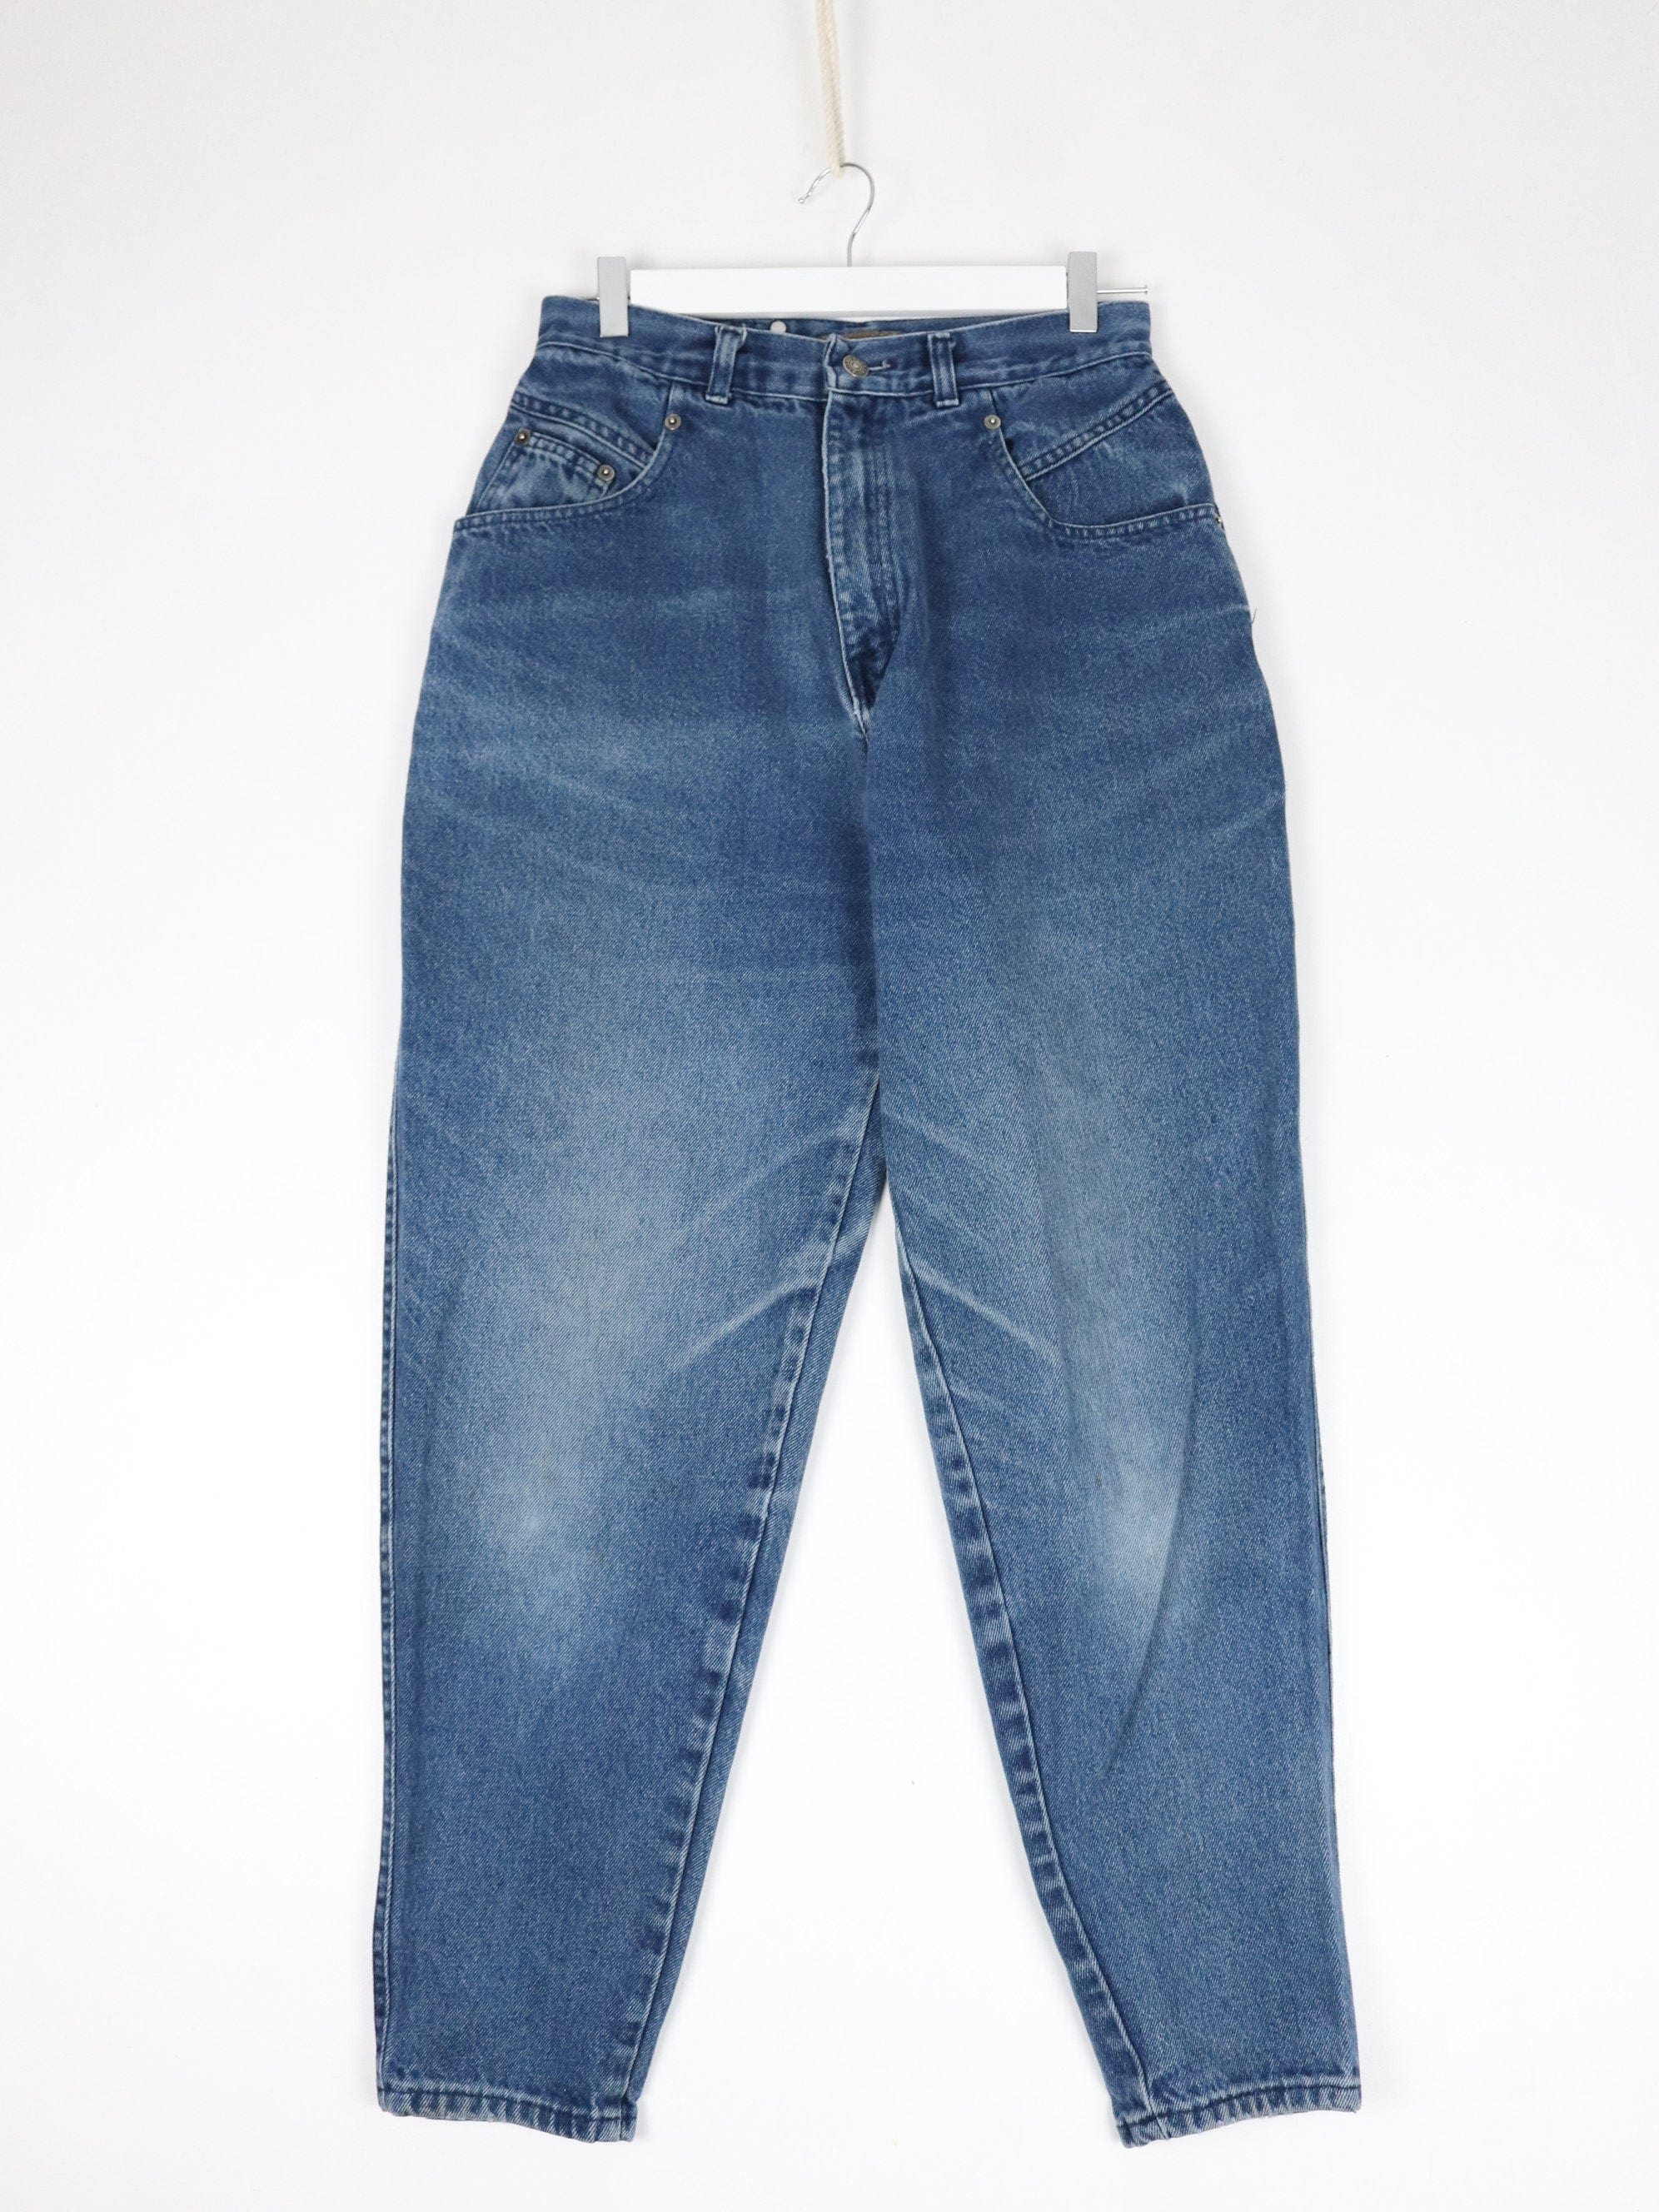 Vintage Forelli Pants Womens 12 Blue High Waisted Denim Jeans